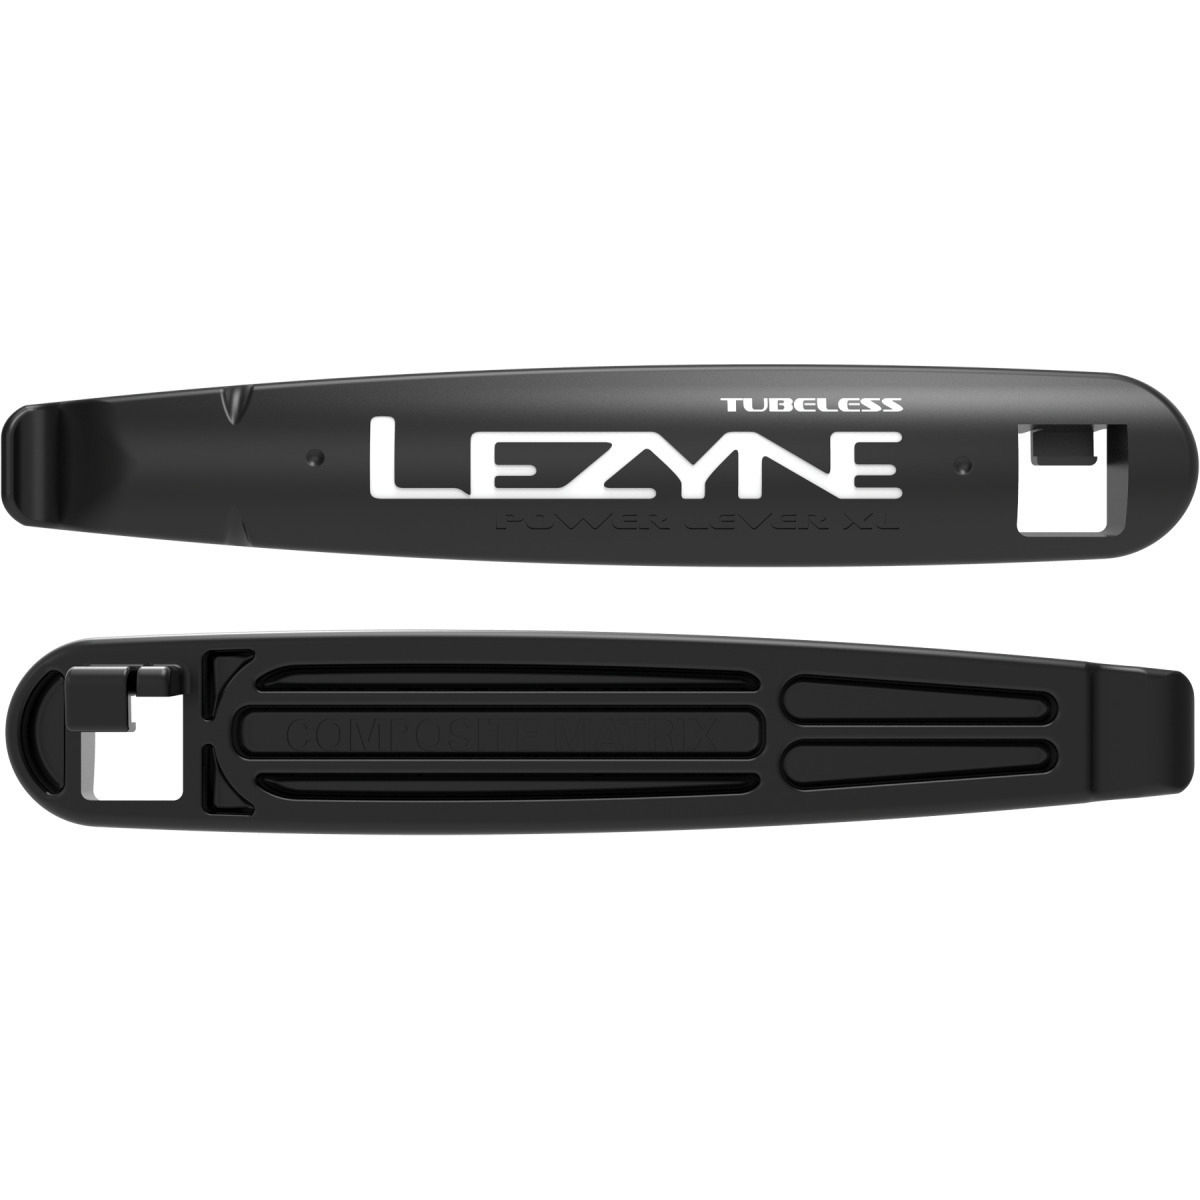 Productfoto van Lezyne Tubeless Power XL Tire Lever - black